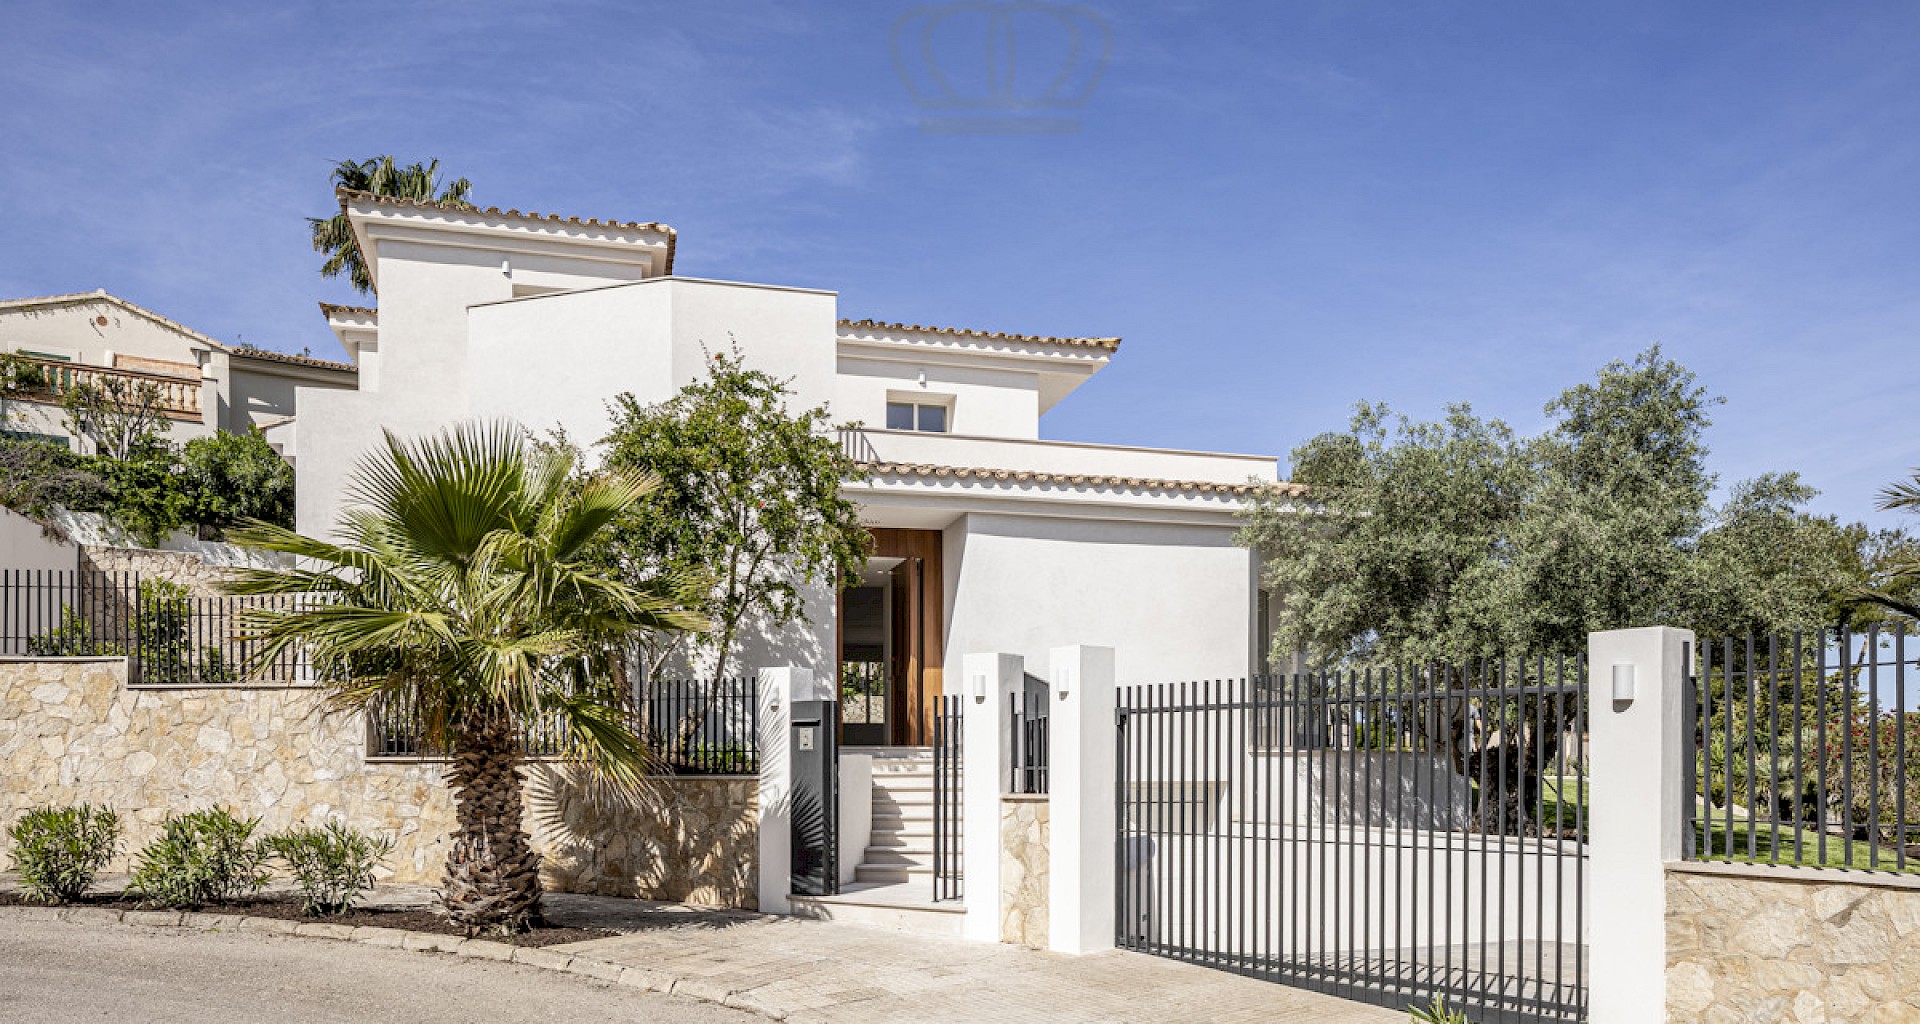 KROHN & LUEDEMANN Villa modernizada con vistas al mar en Santa Ponsa Mallorca con parcela plana 